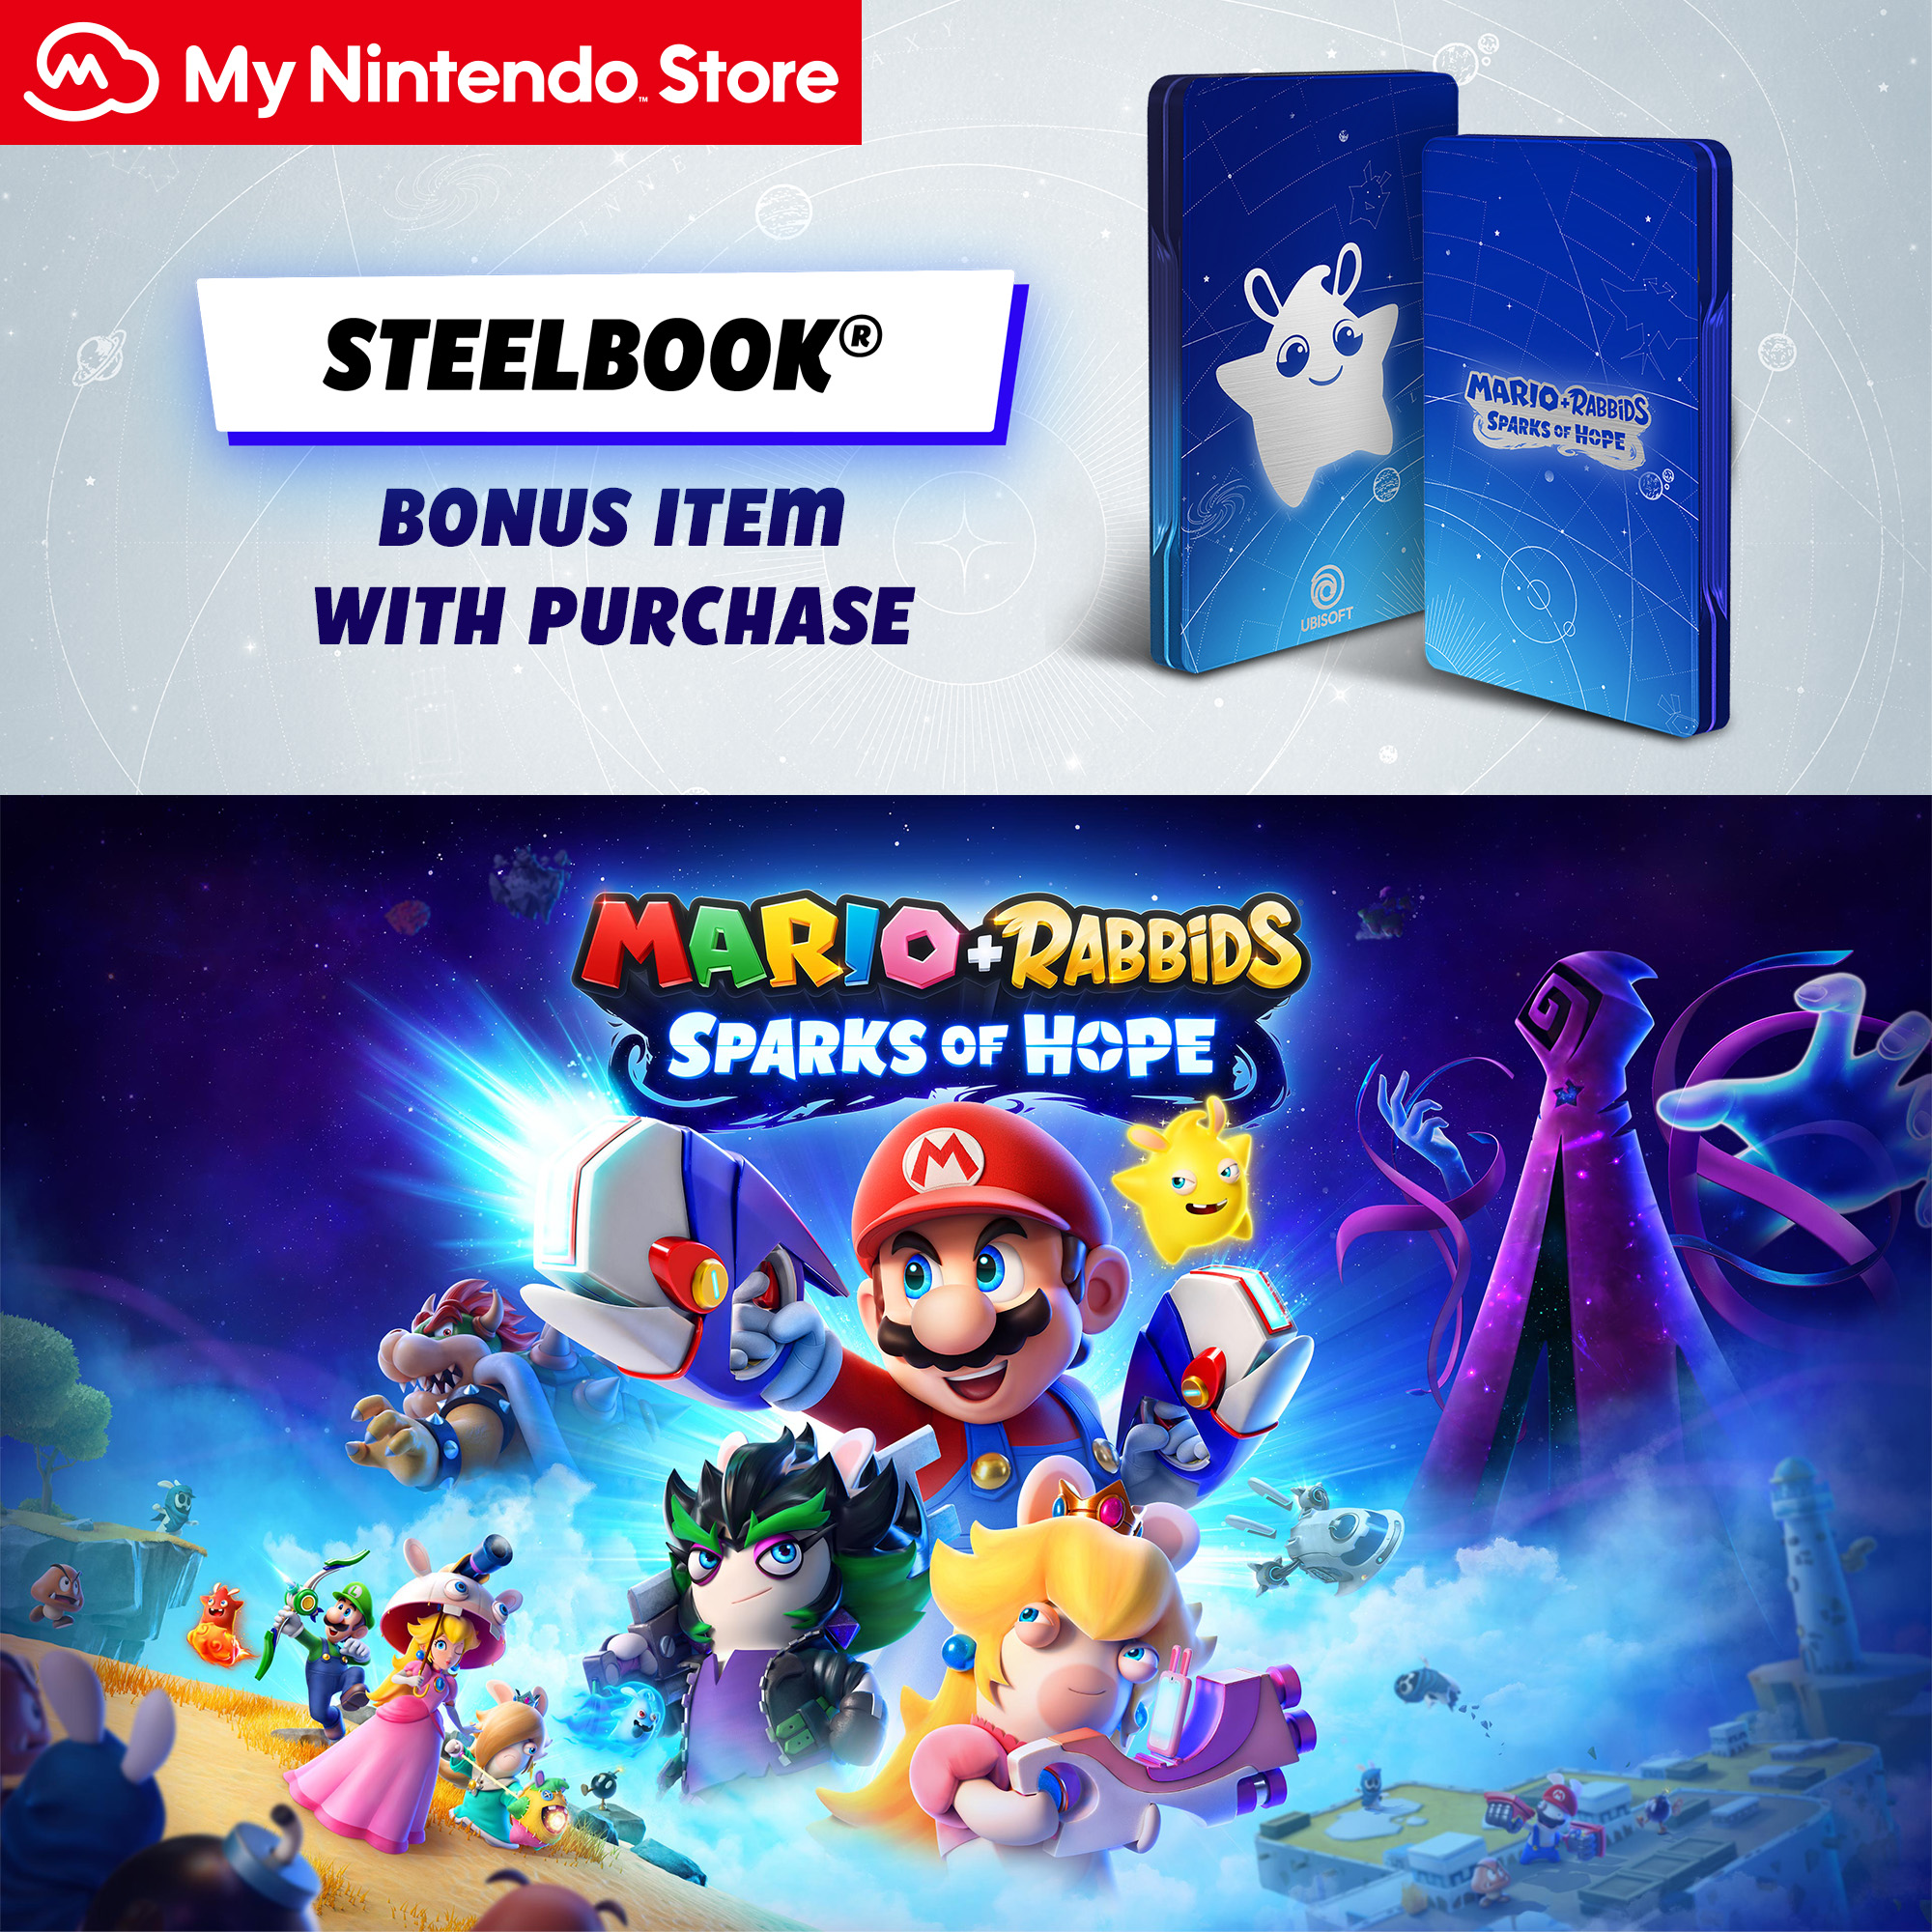 Pre-order Mario + Rabbids Sparks of Hope on My Nintendo Store and receive a bonus SteelBook®! 